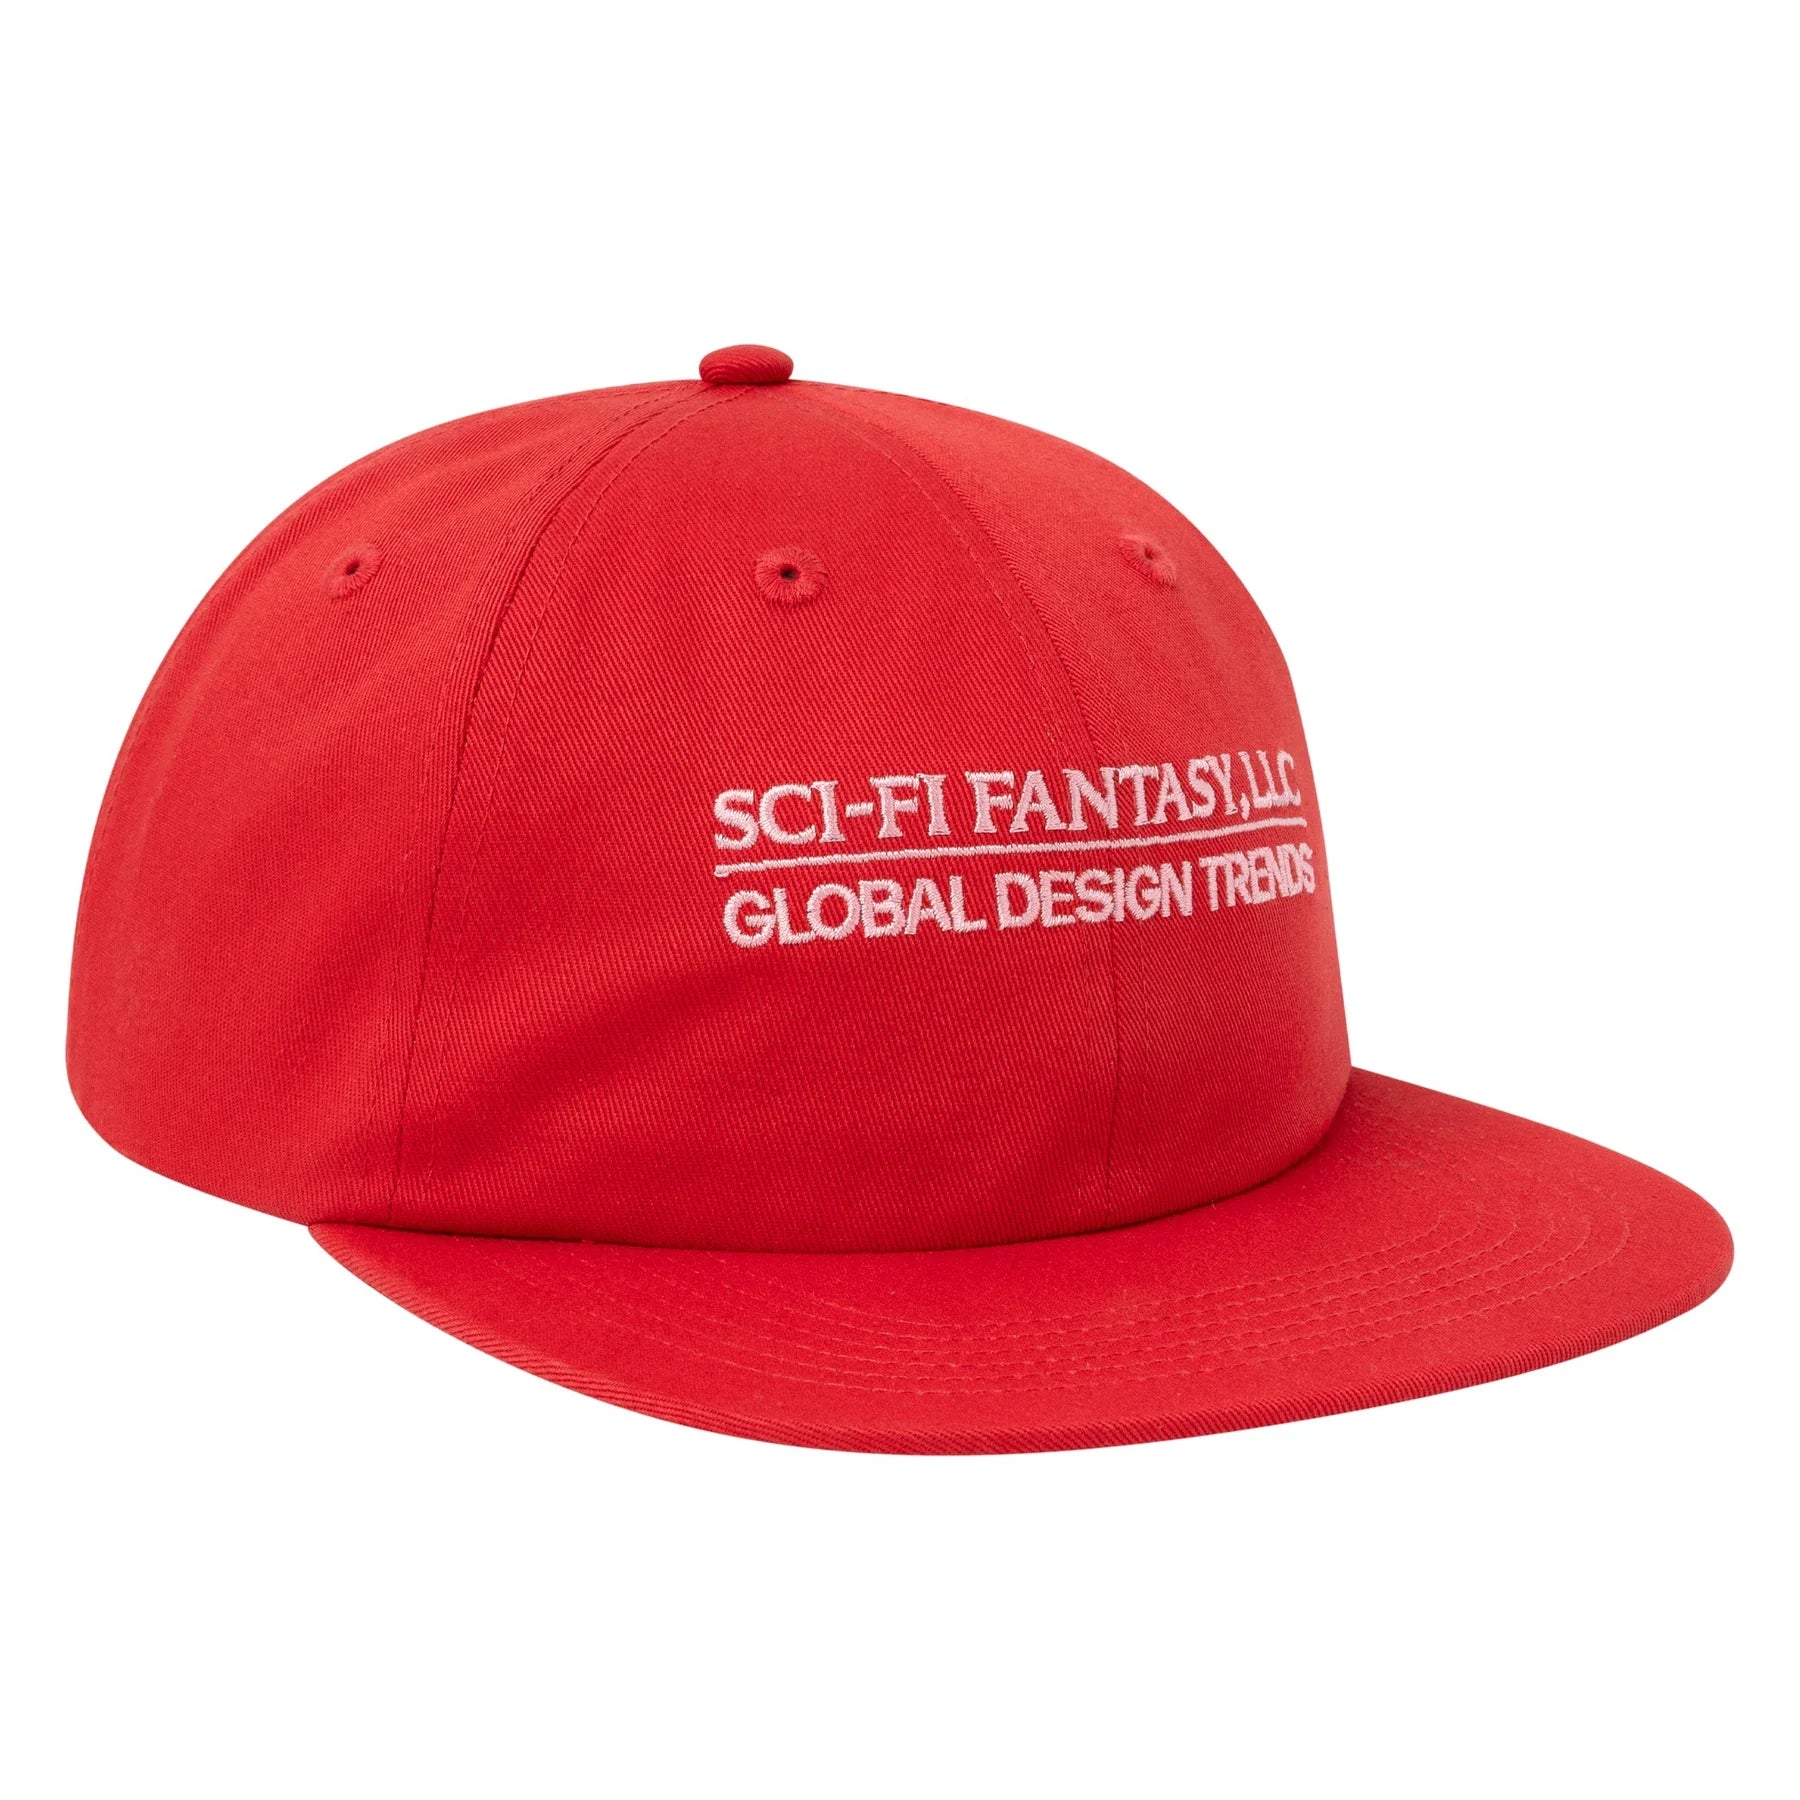 GLOBAL DESIGN TRENDS HAT RED